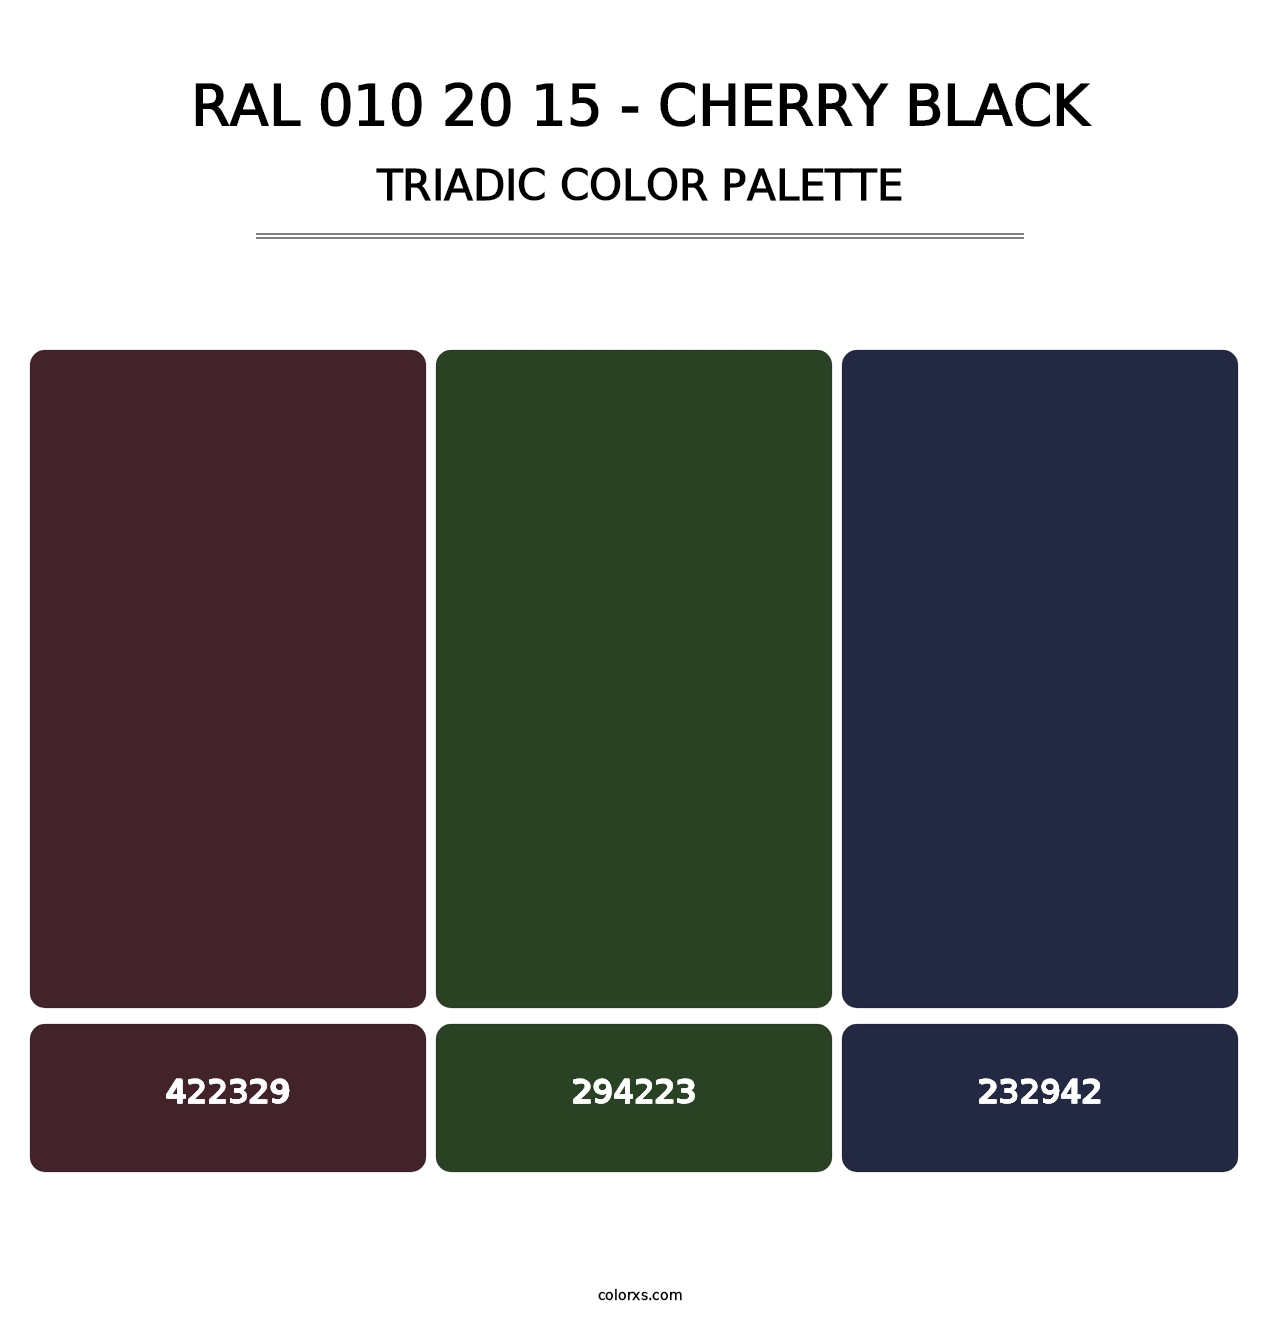 RAL 010 20 15 - Cherry Black - Triadic Color Palette